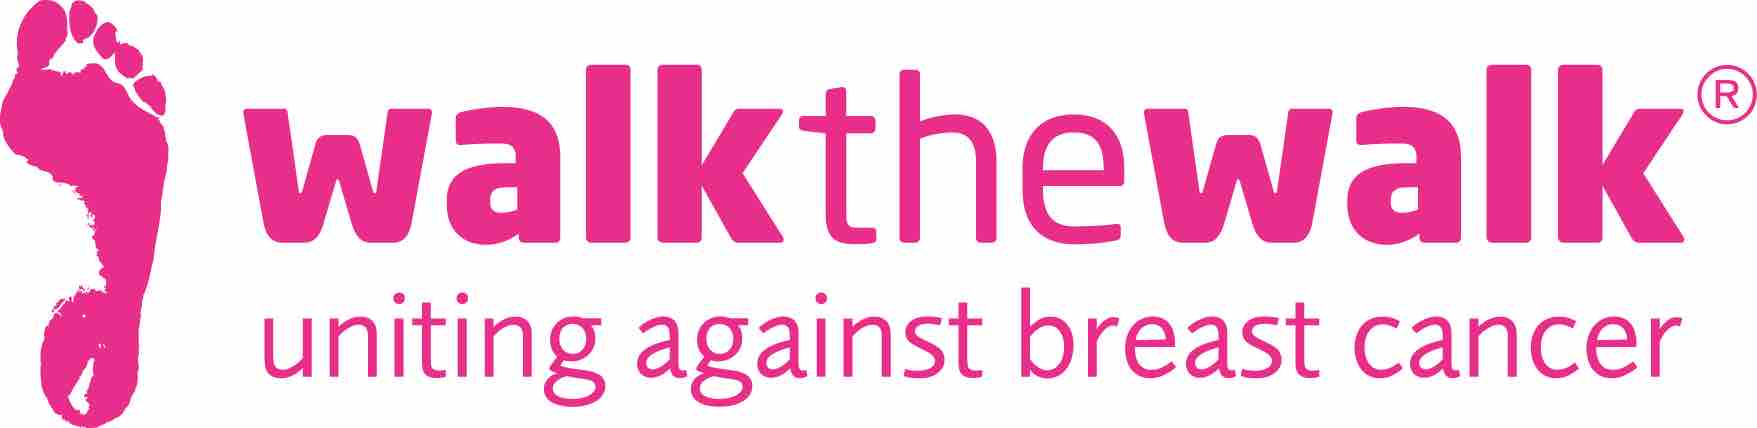 Walk the Walk - unite against breast cancer